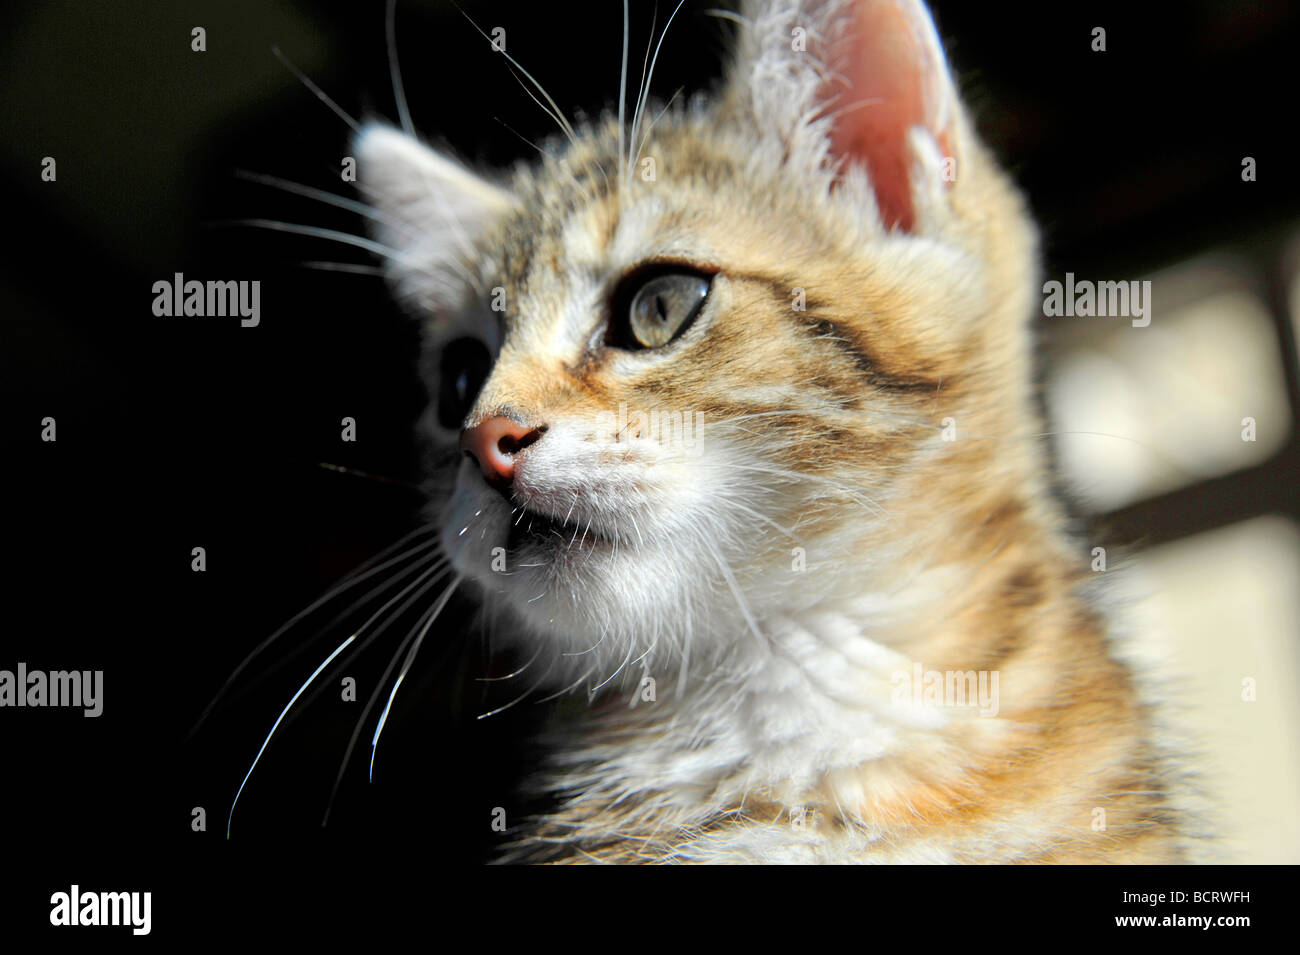 Young tabby kitten Stock Photo